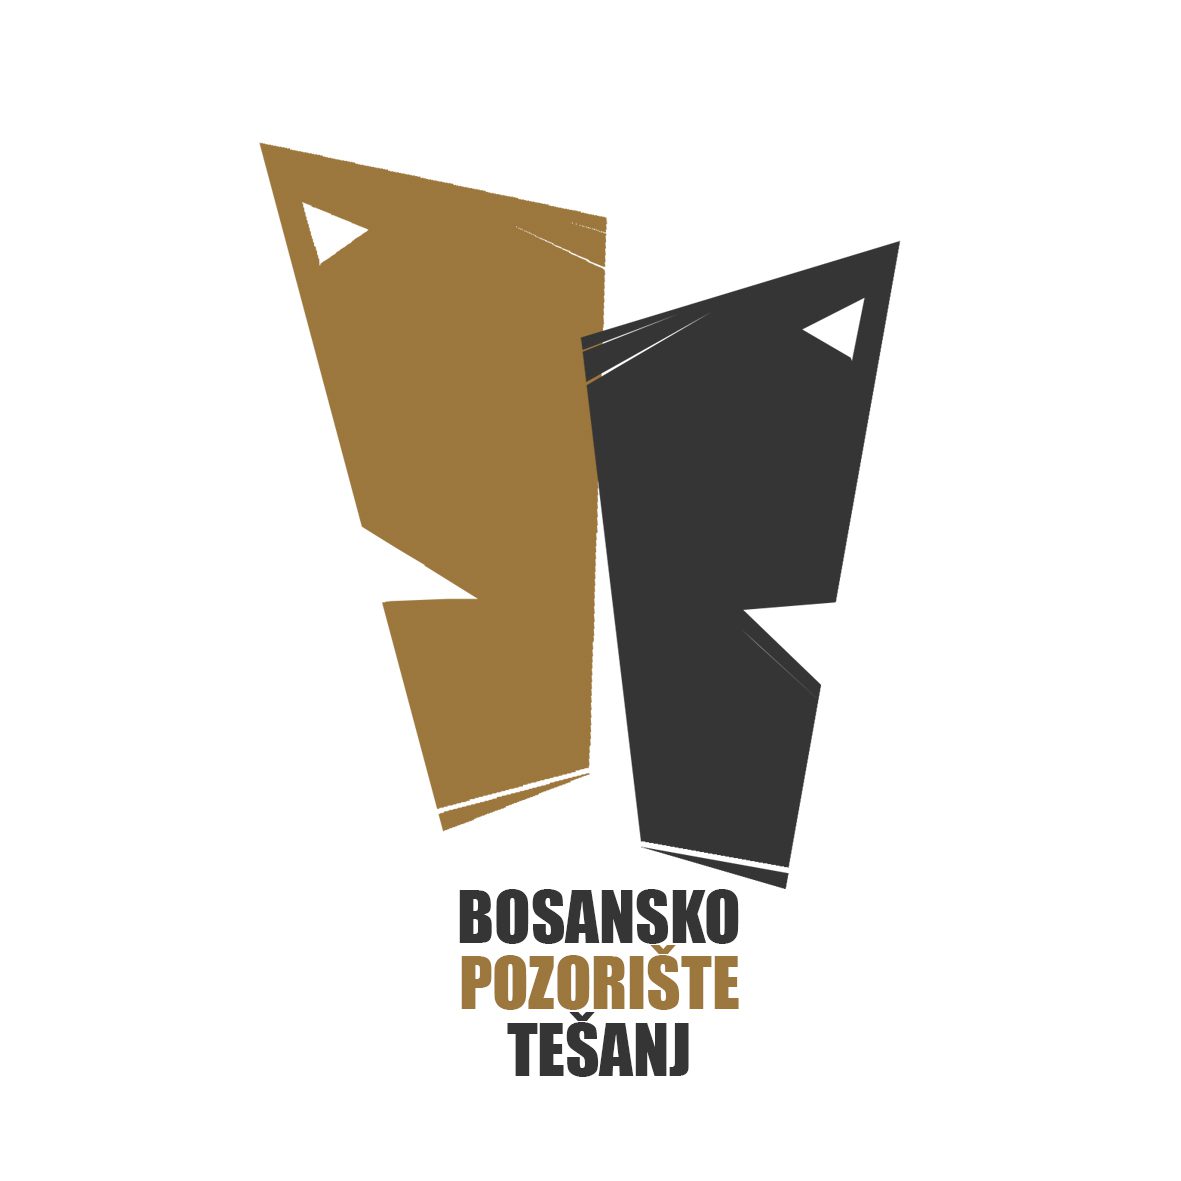 Bosansko pozoriste Tesanj